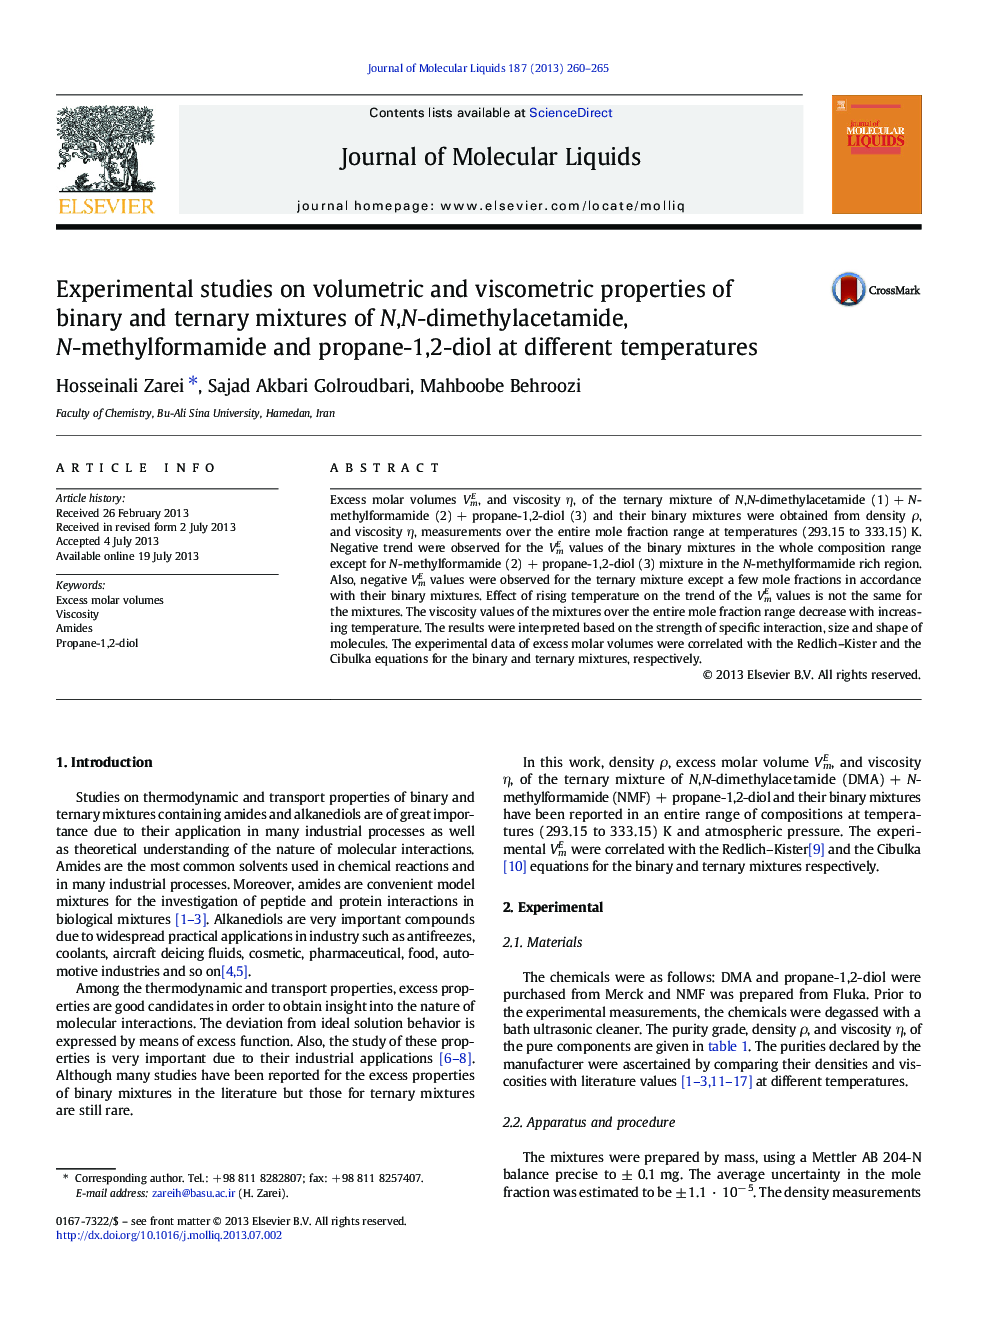 Experimental studies on volumetric and viscometric properties of binary and ternary mixtures of N,N-dimethylacetamide, N-methylformamide and propane-1,2-diol at different temperatures